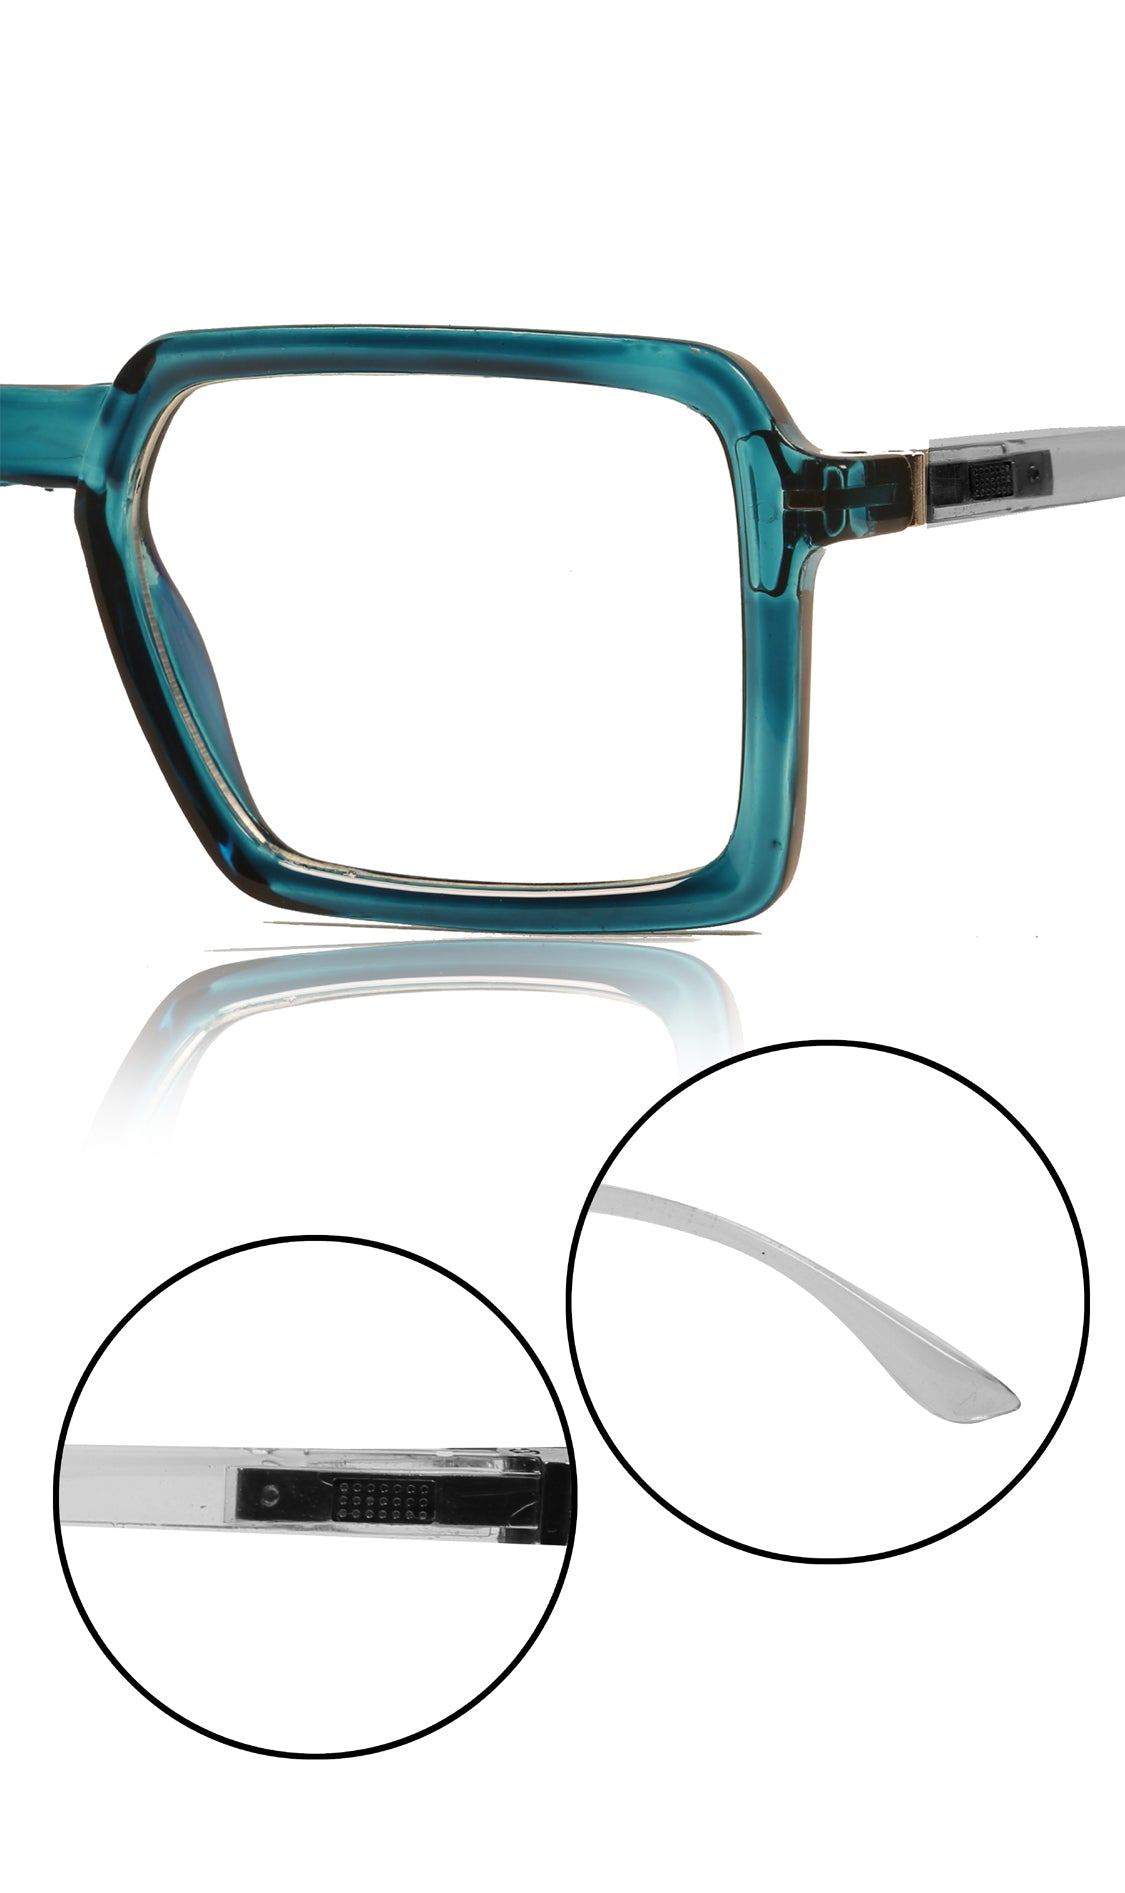 Jodykoes® Colour Frame Series Eyewears | Blue Rays Protection Square Stylish Spectacles With Anti Glare Eyeglasses For Men and Women Eyewears (Turquoise Blue) - Jodykoes ®